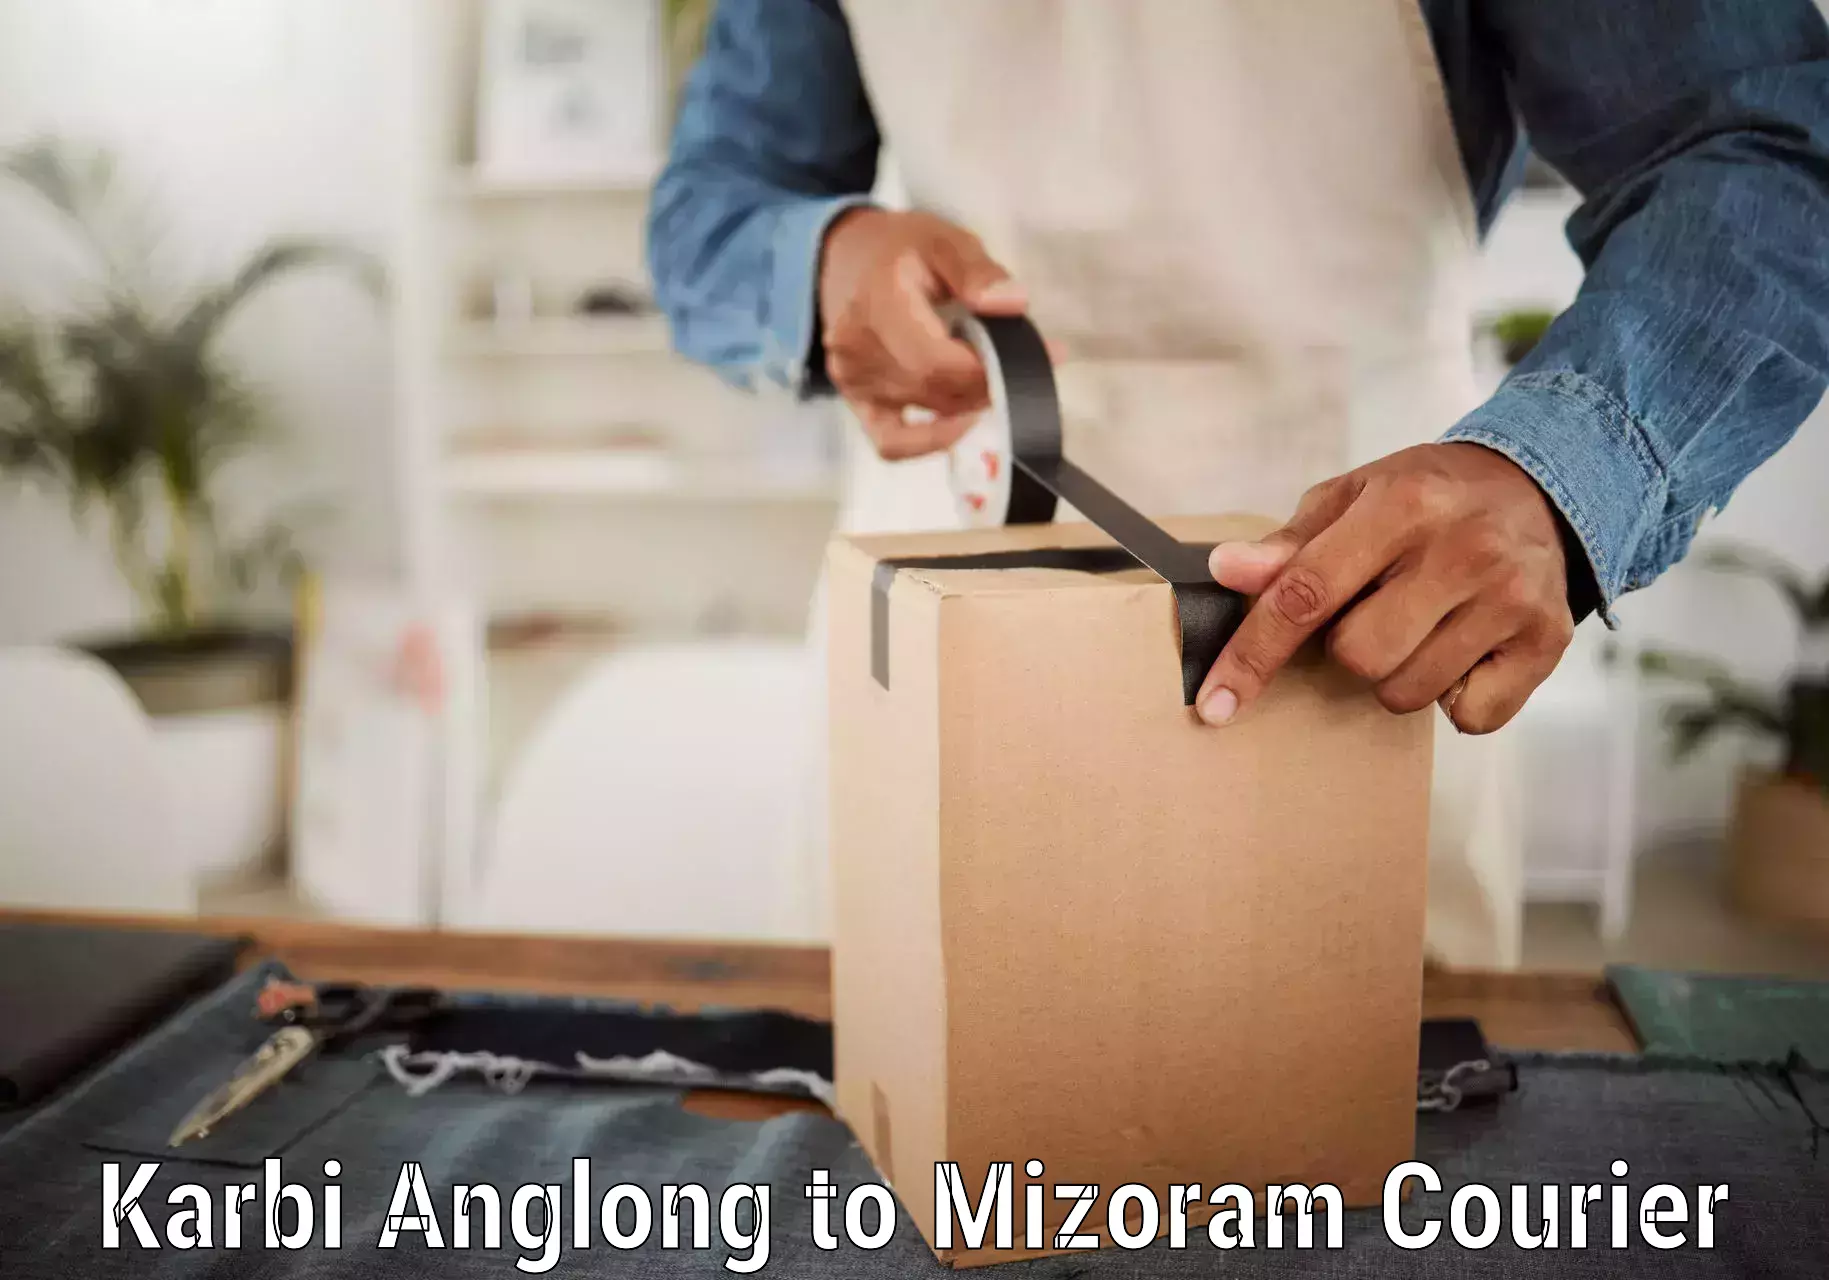 Professional courier handling Karbi Anglong to Siaha